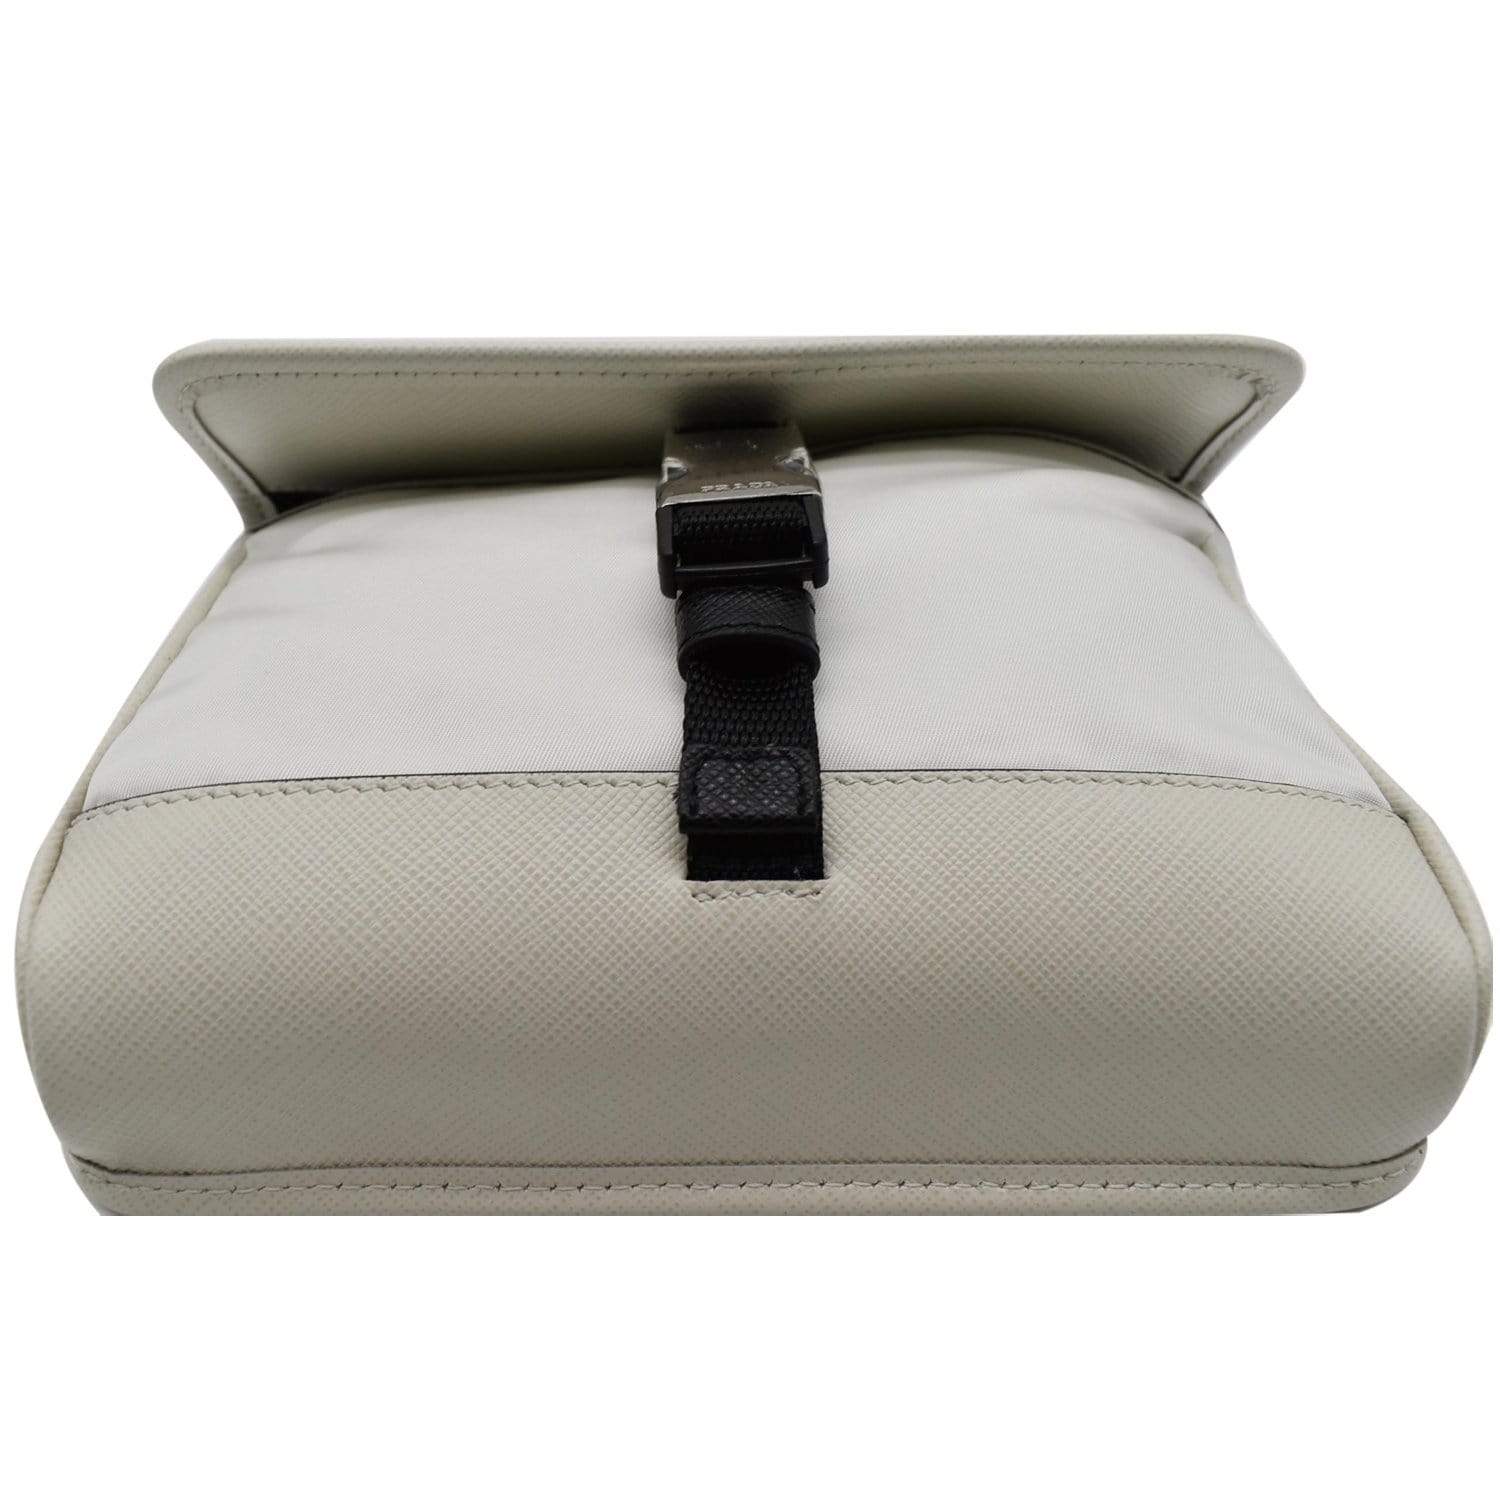 Prada, Bags, Prada Renylon Saffiano Leather Smartphone Case